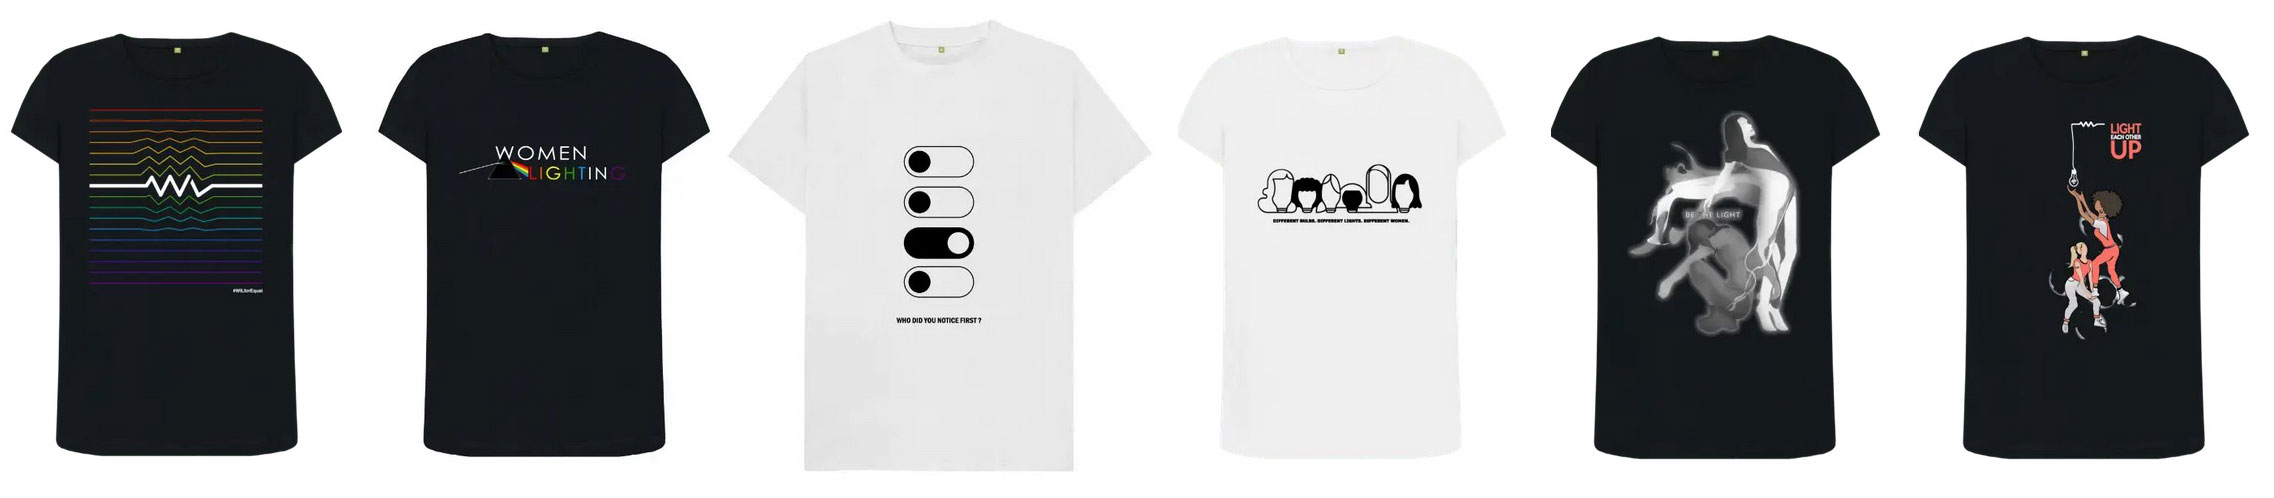 WIL T-shirt designs